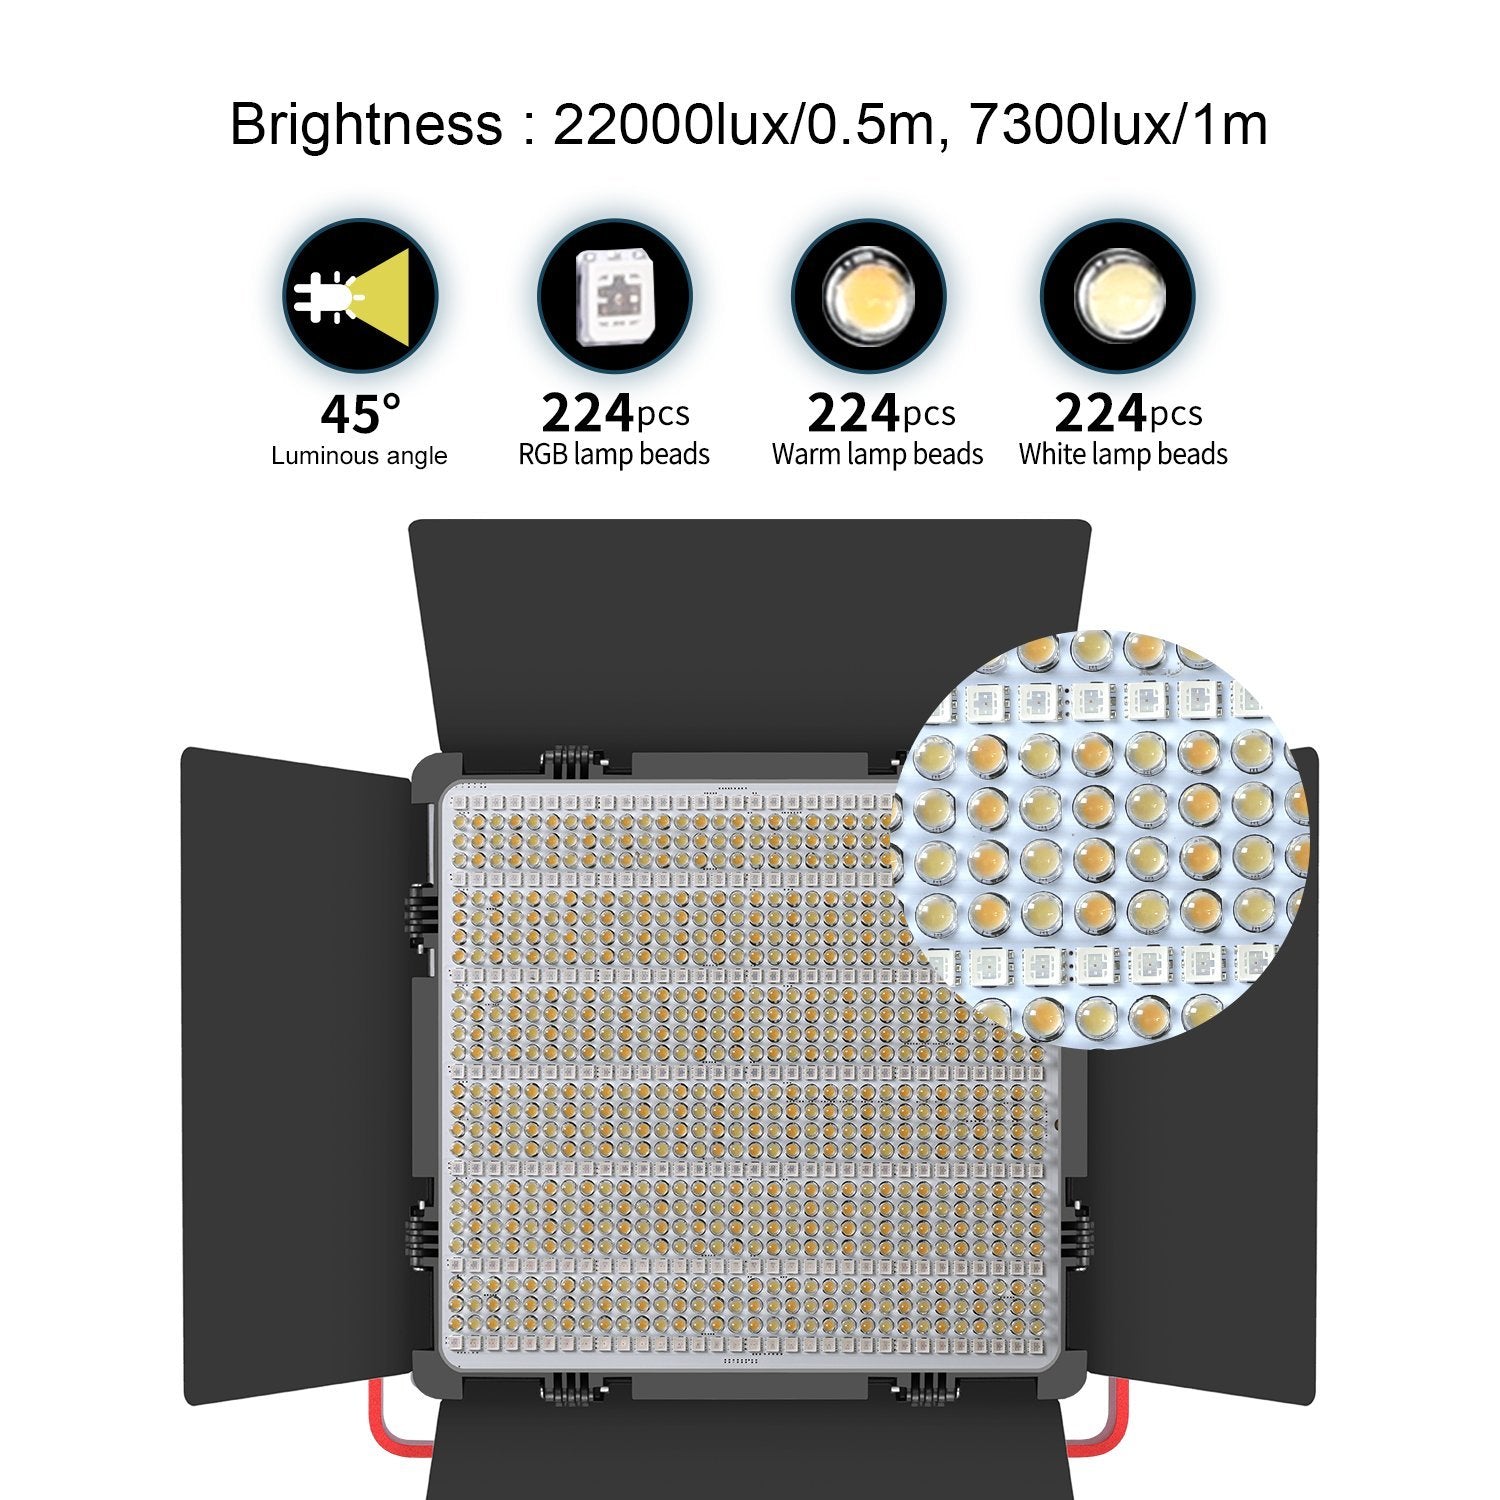 GVM-1200D 50W Bi-Color+50W RGB Video Light Dual Lamp Set - GVMLED